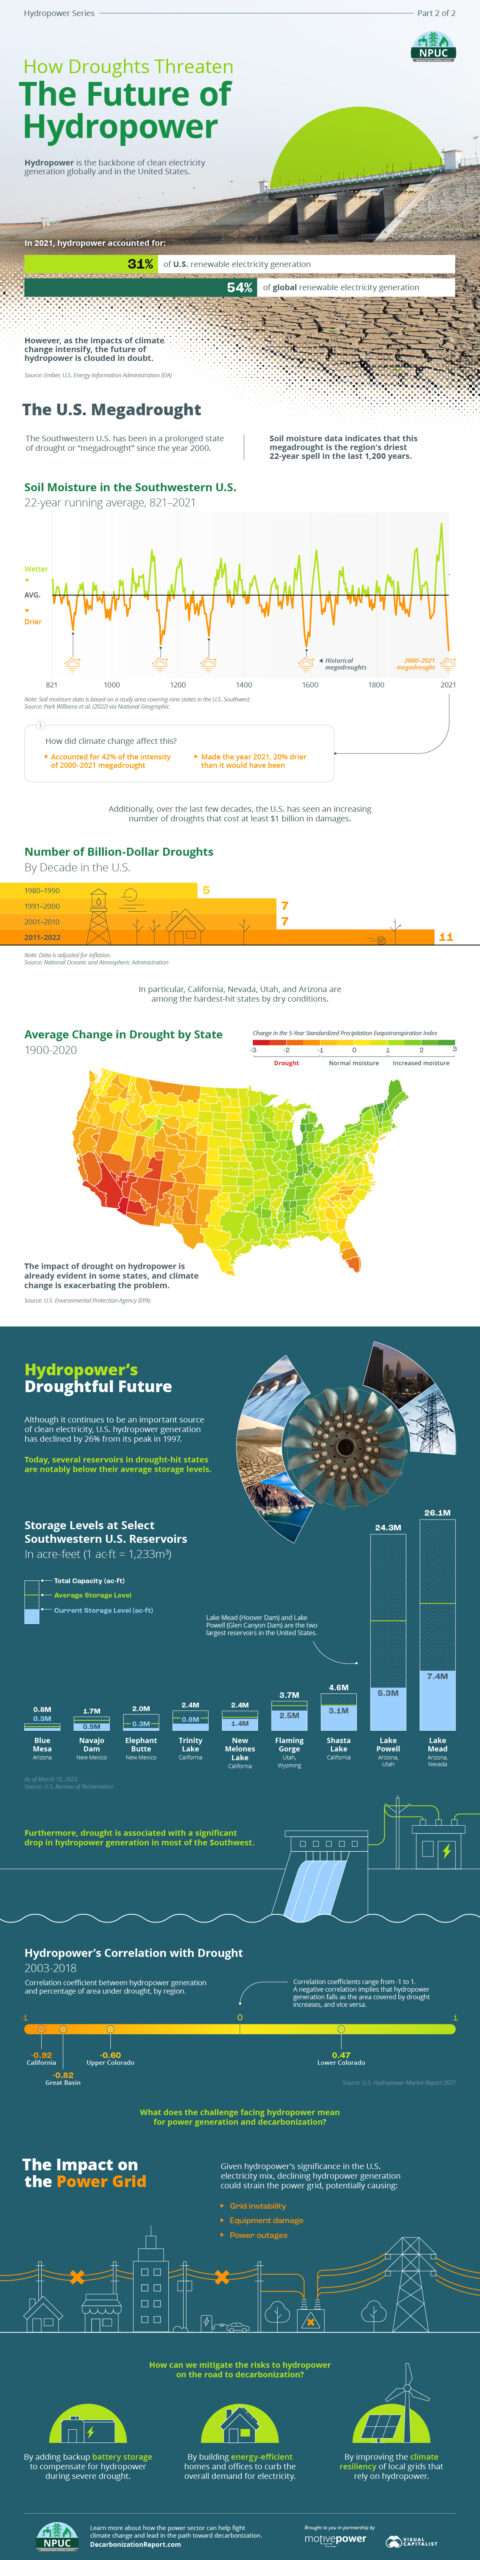 The 30 Largest U.S. Hydropower Plants